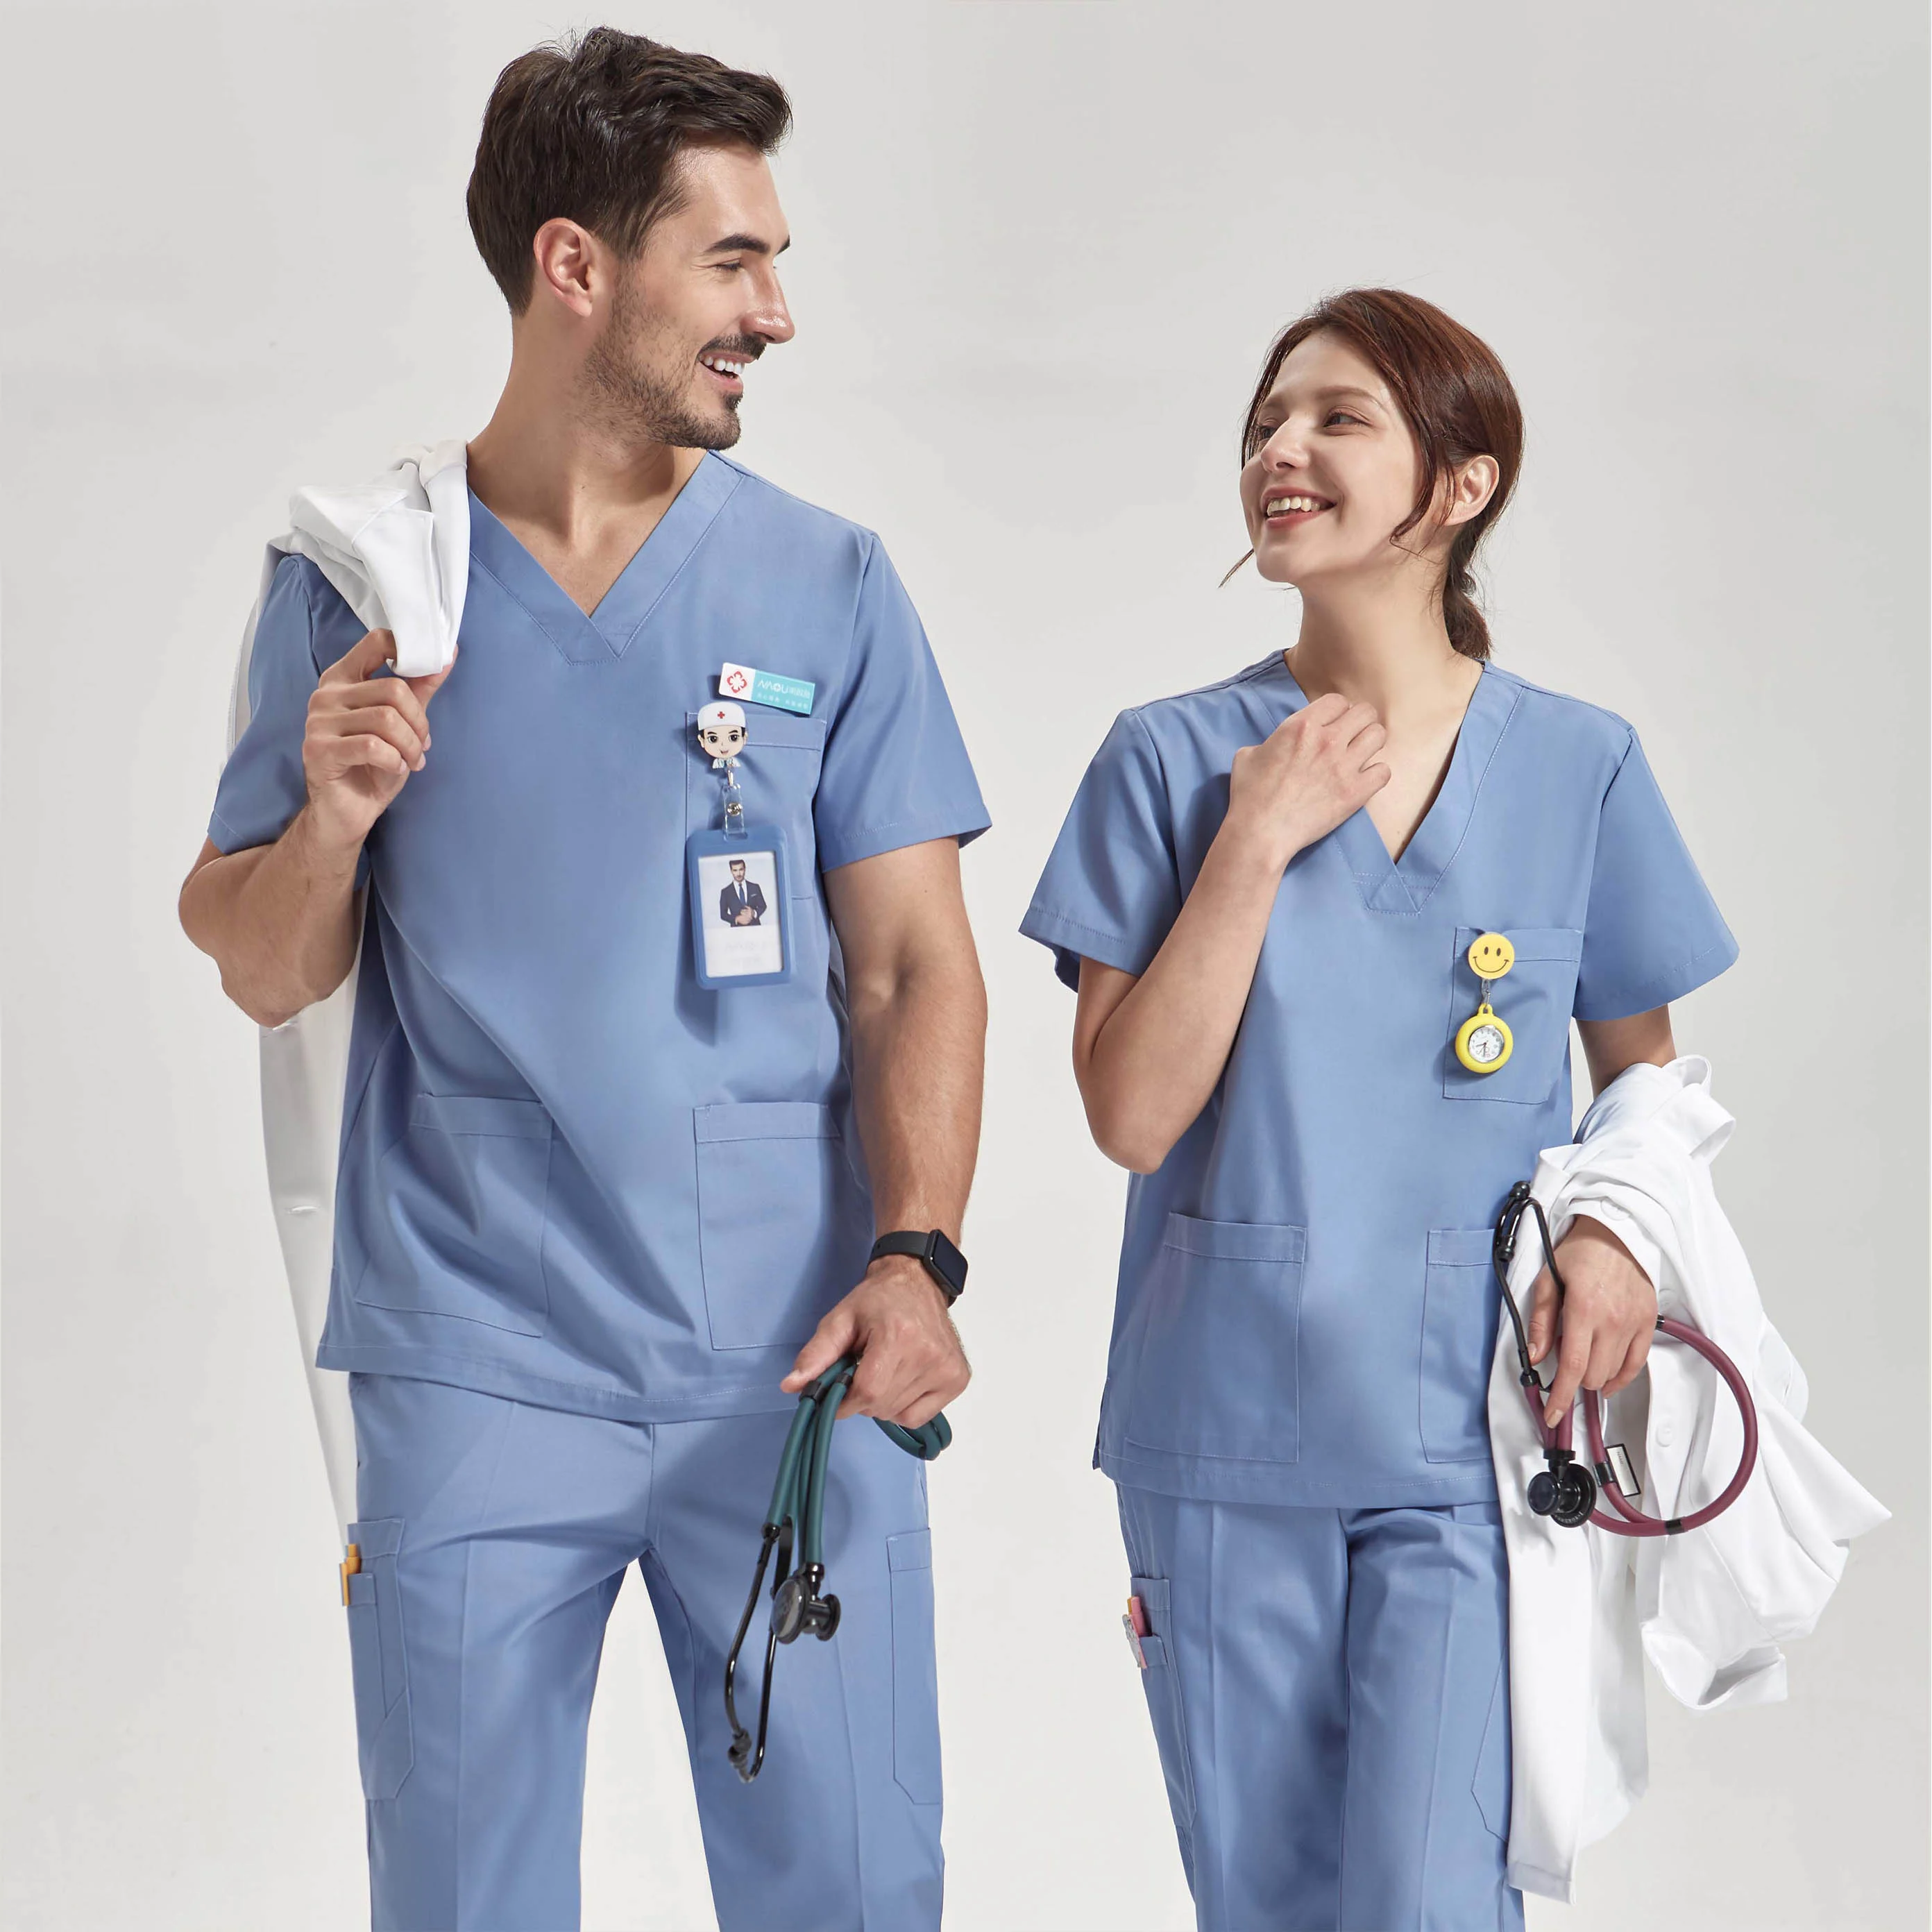 

Ultra Light Scrub Set Medical Nurse Uniform for Women Men Hospital Doctor Workwear Poplin Fabric Veterinary Surgical Outfit 8020